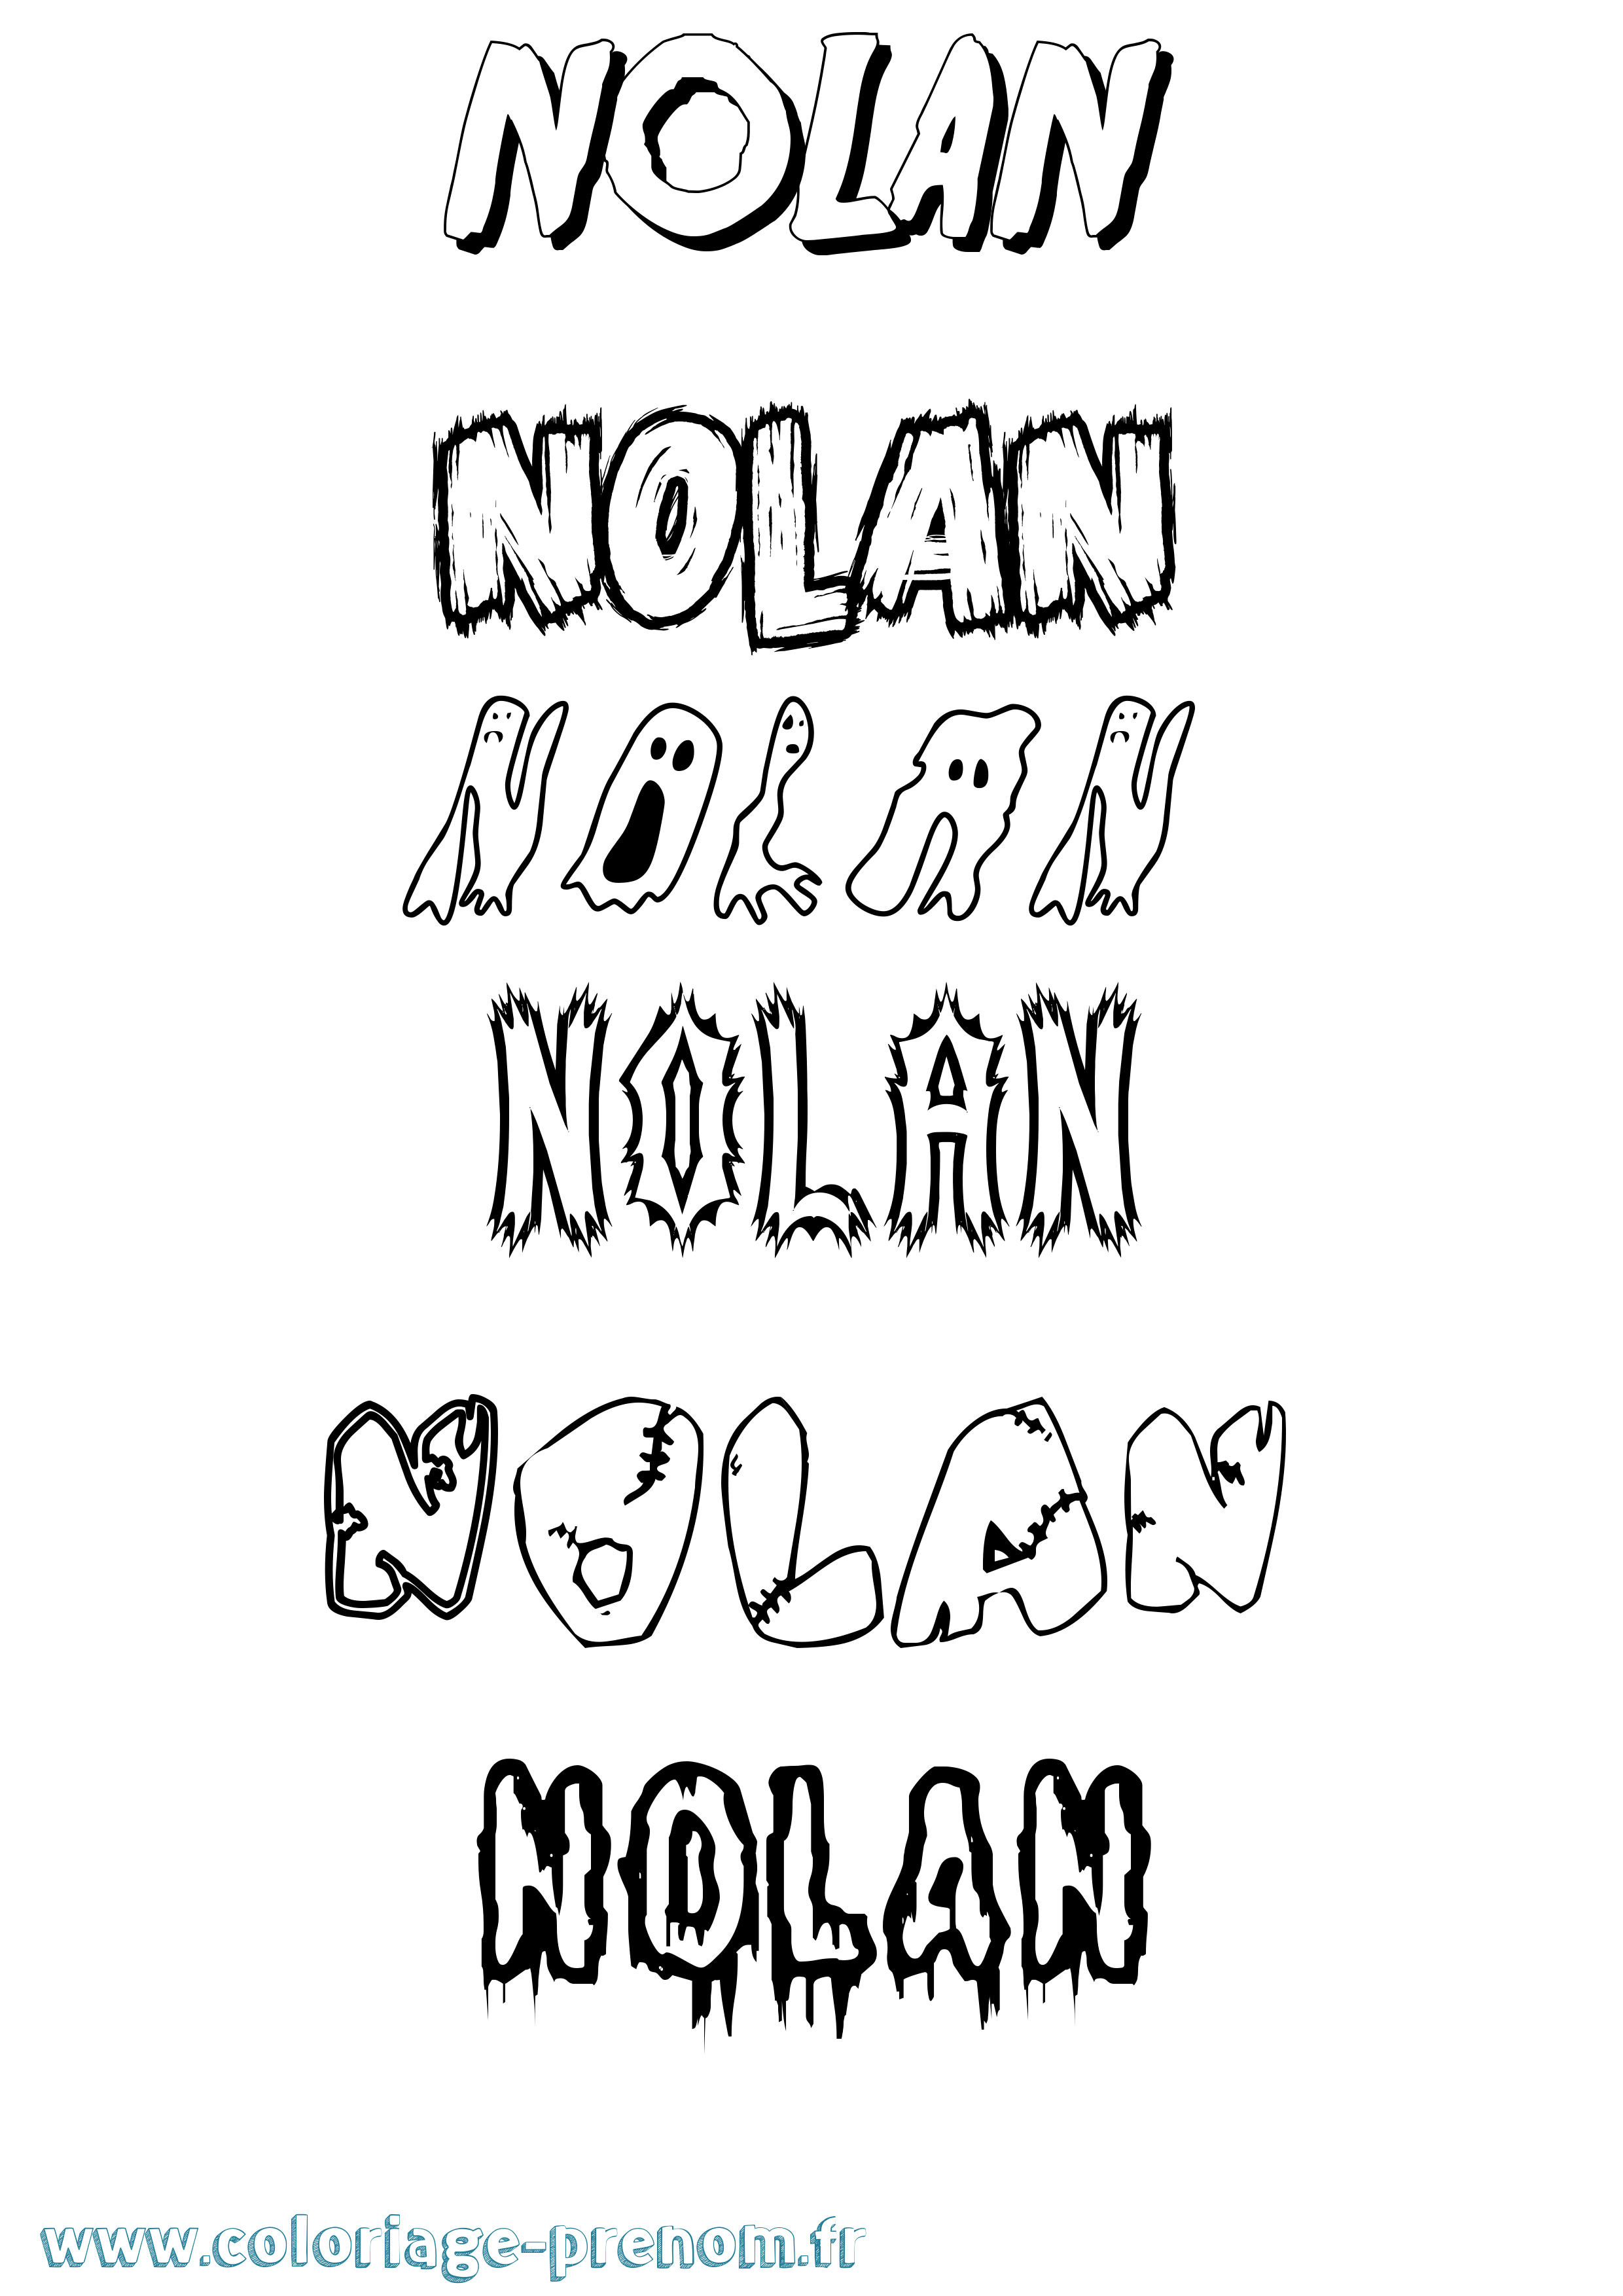 Coloriage prénom Nolan